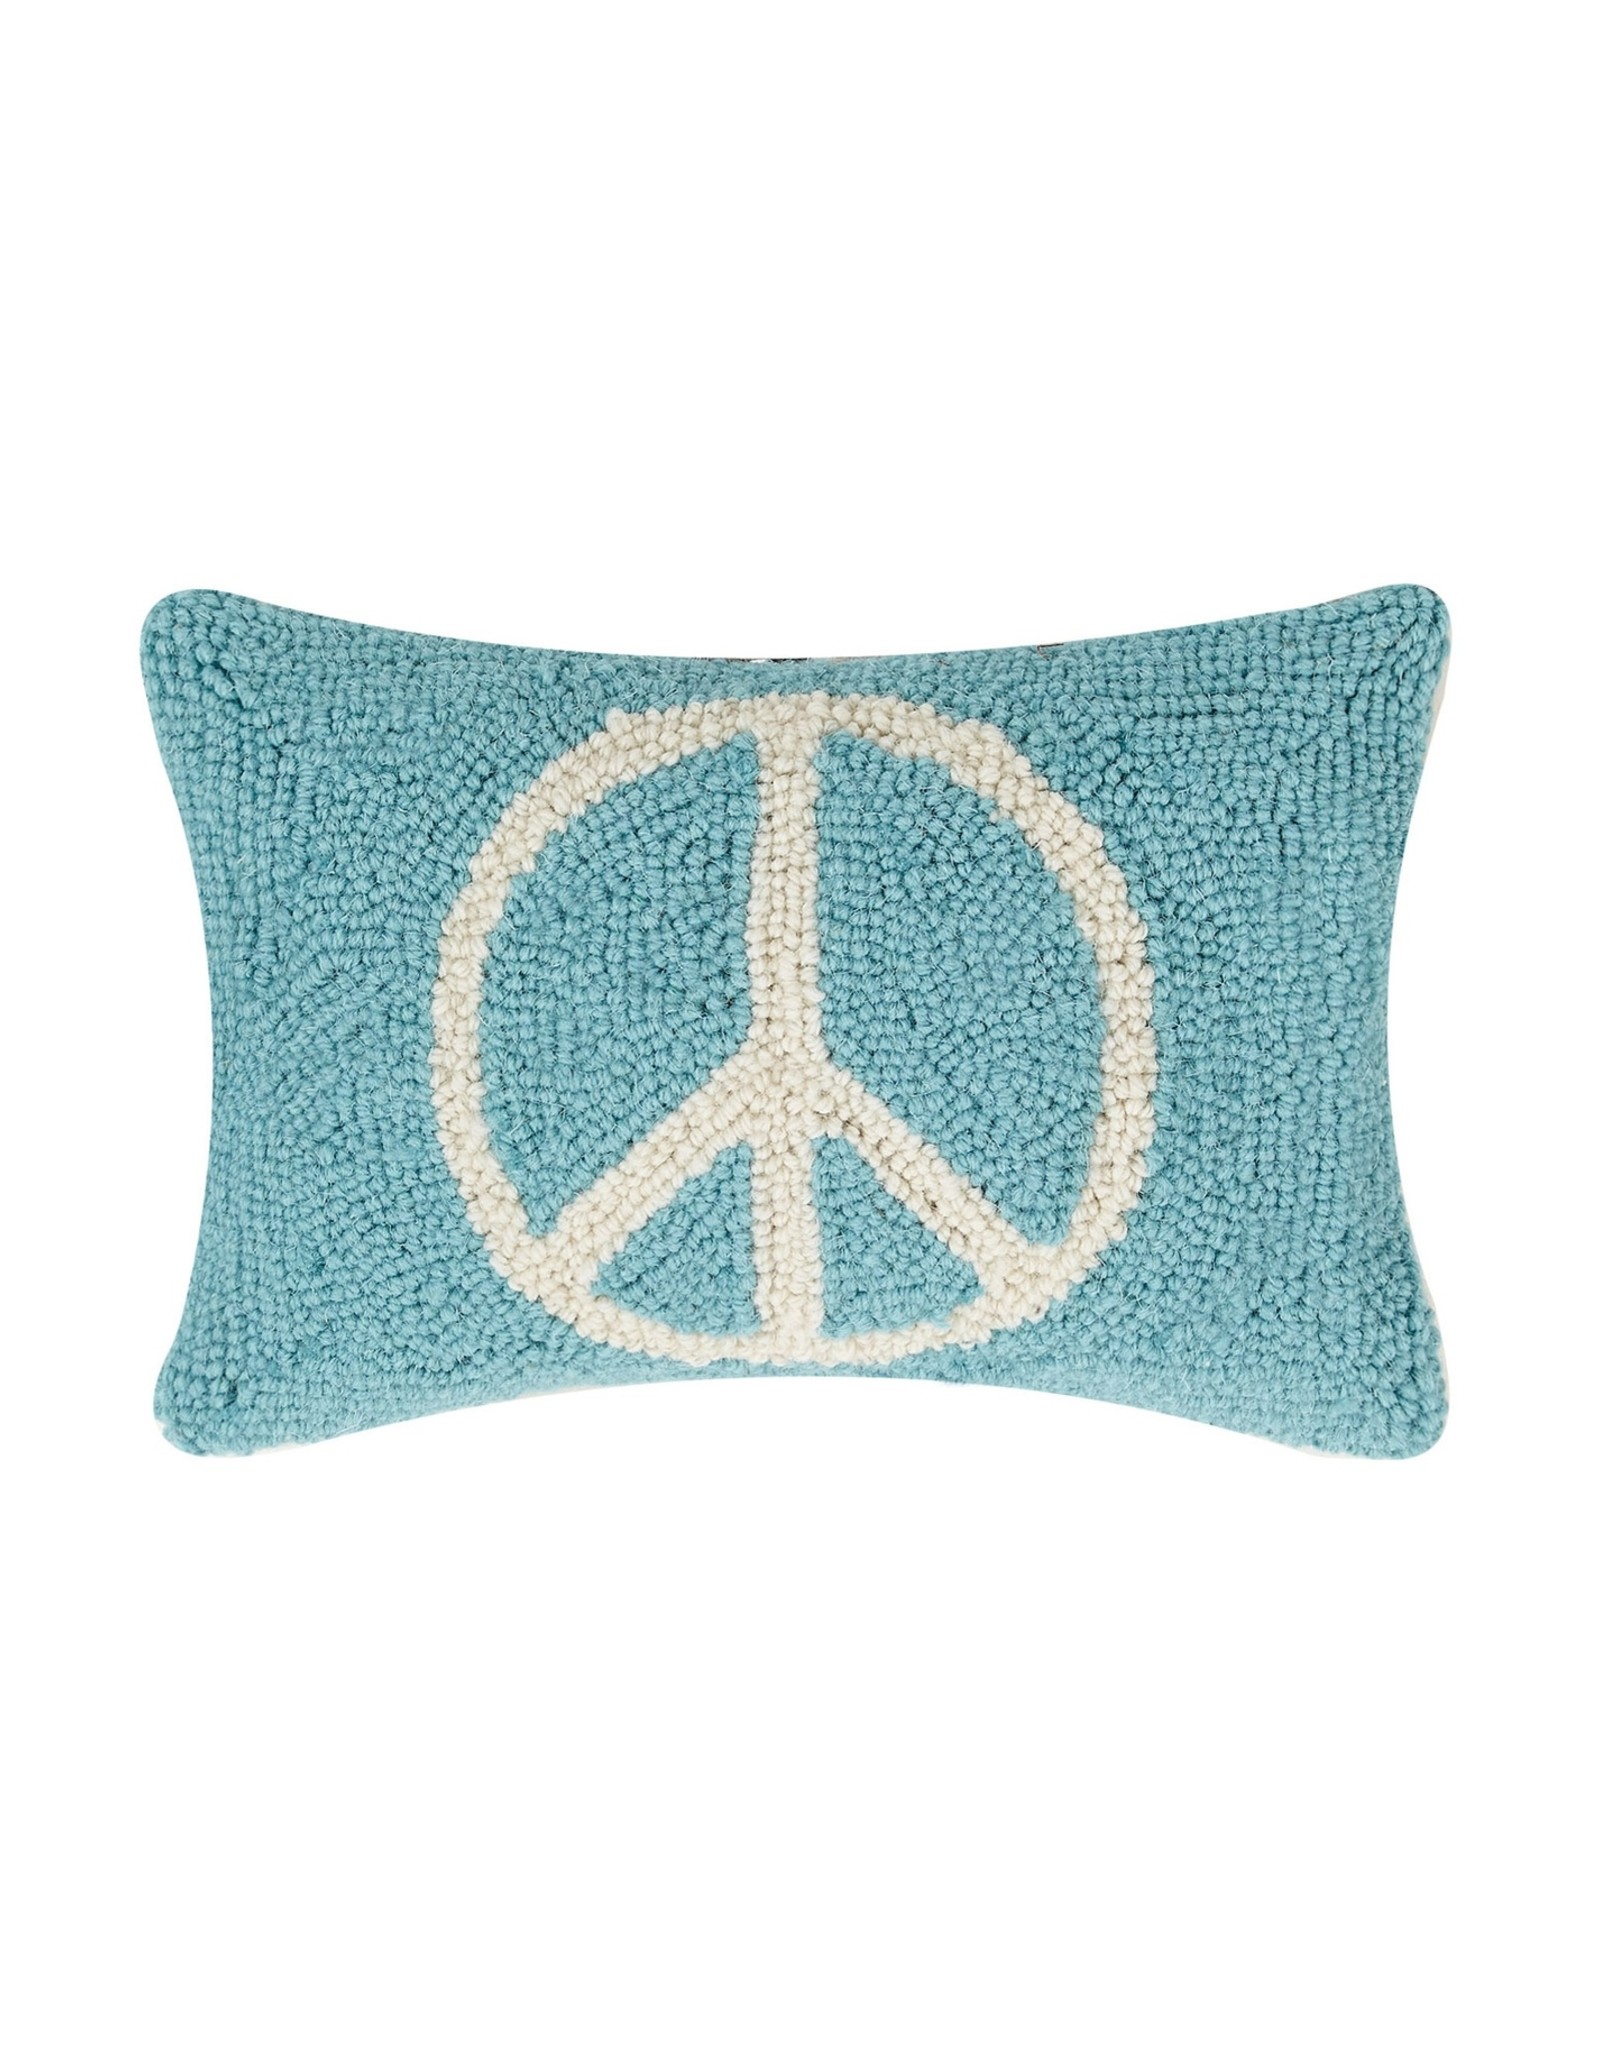 Peking Handicraft Pillow - Turquoise Peace